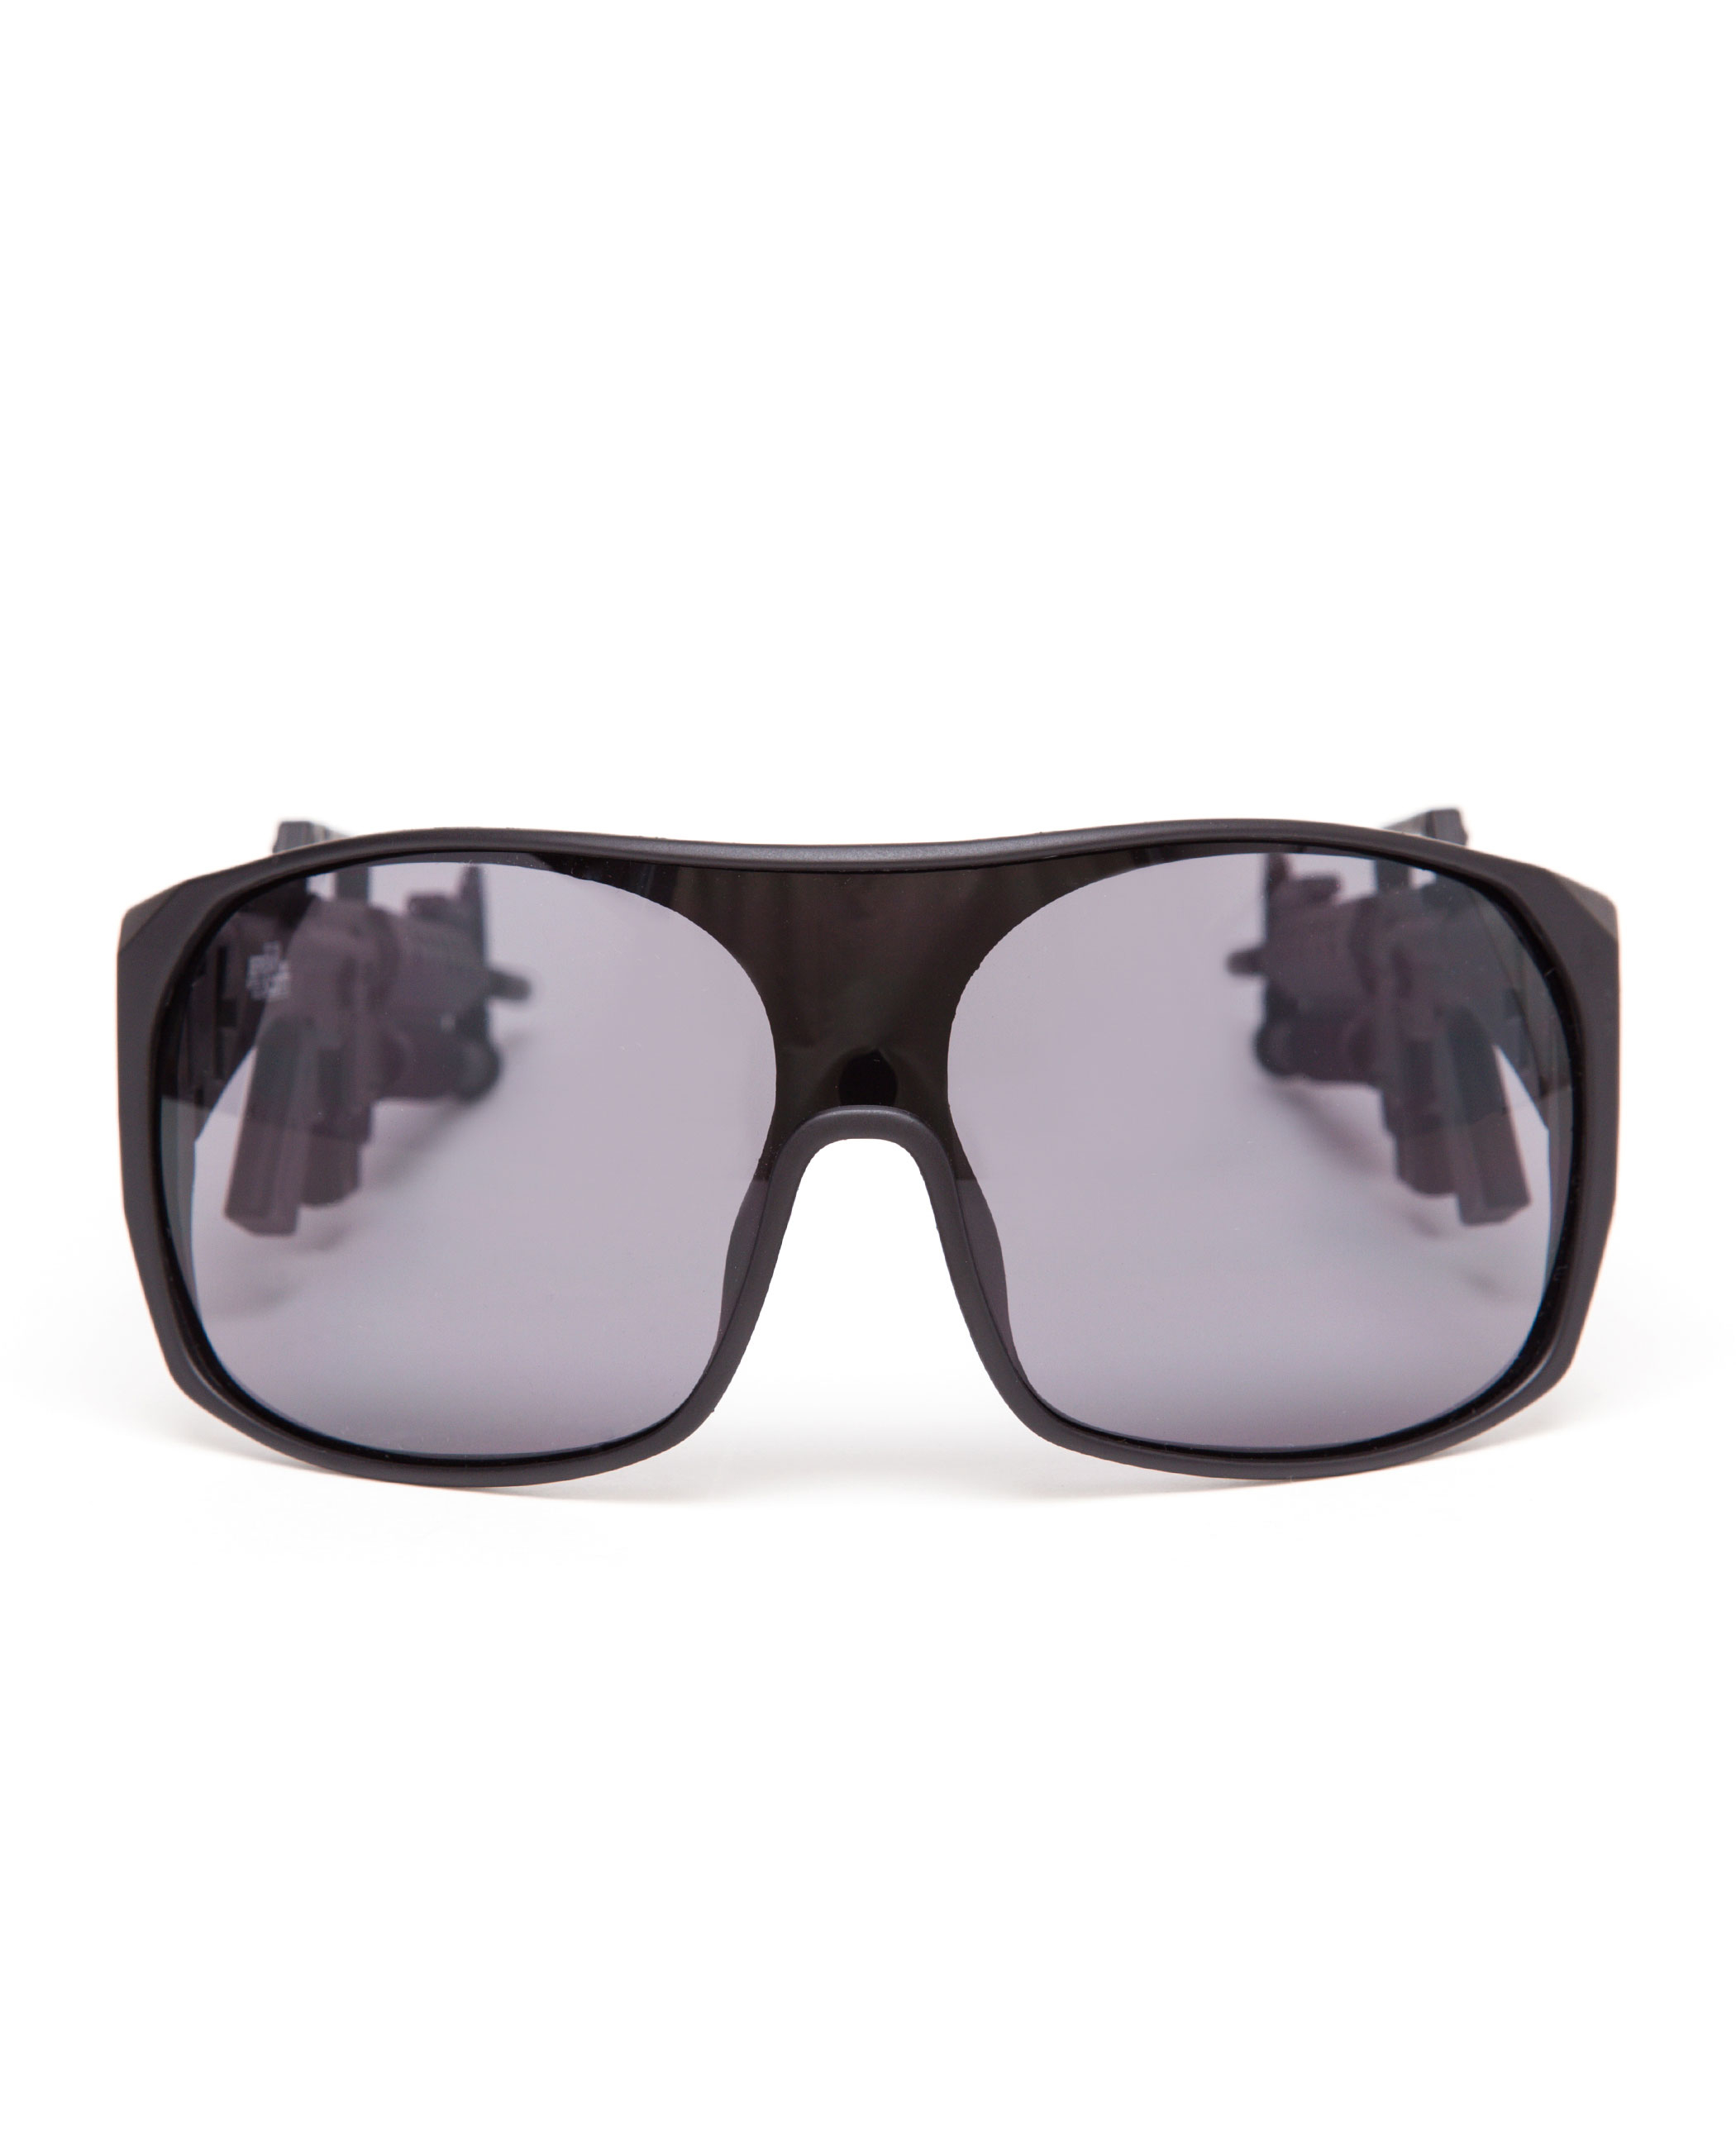 Jeremy Scott Gun Wraparound Sunglasses in Black | Lyst